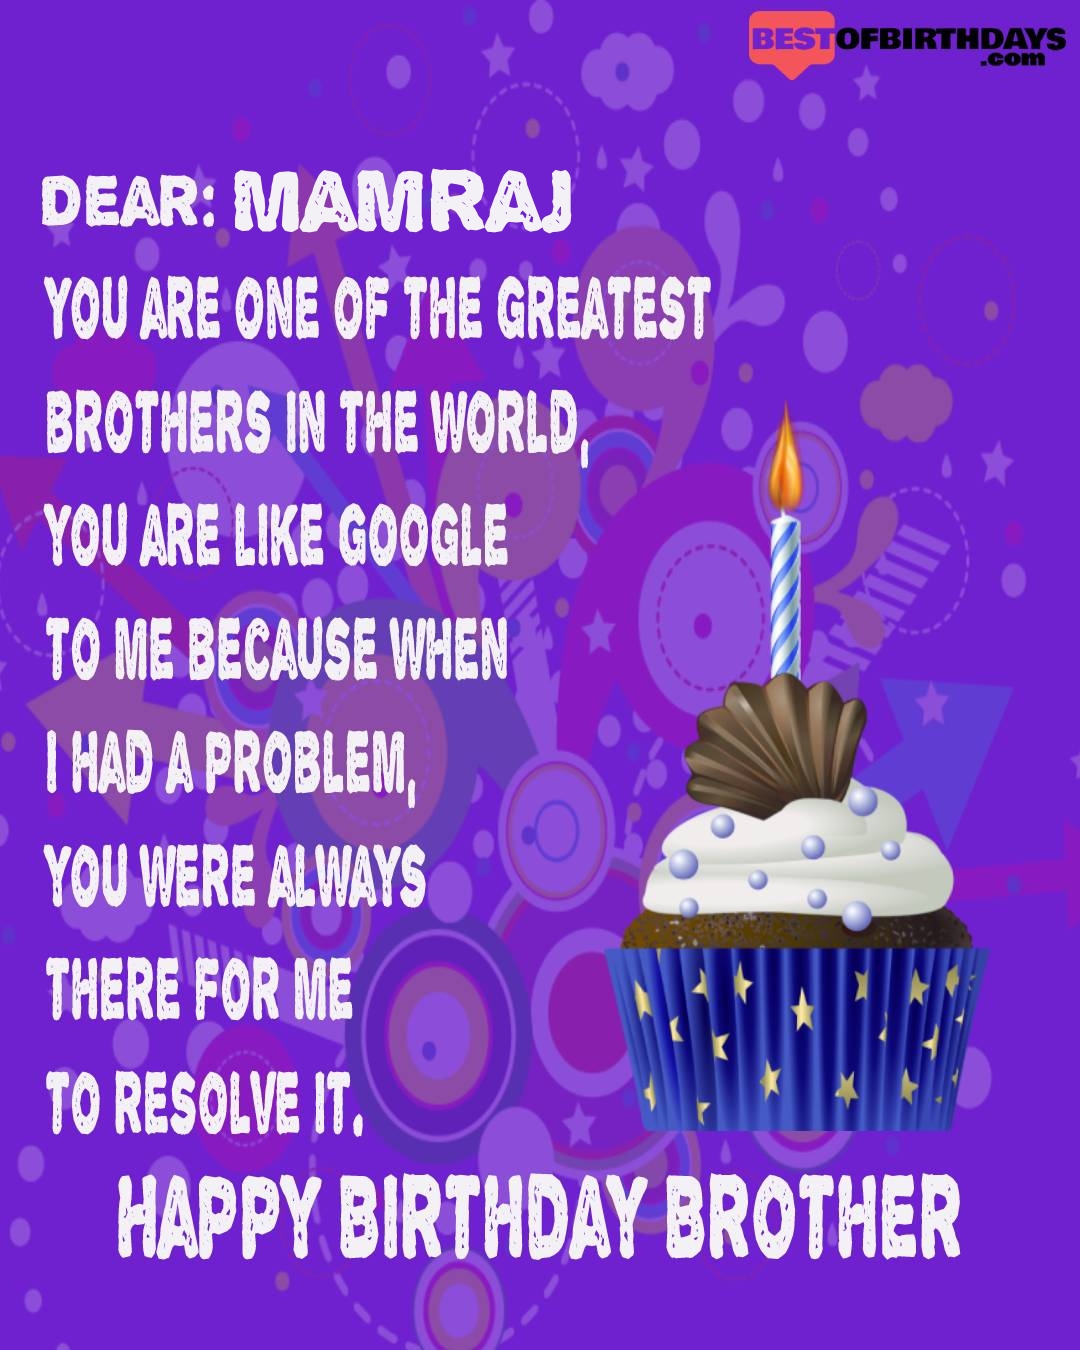 Happy birthday mamraj bhai brother bro